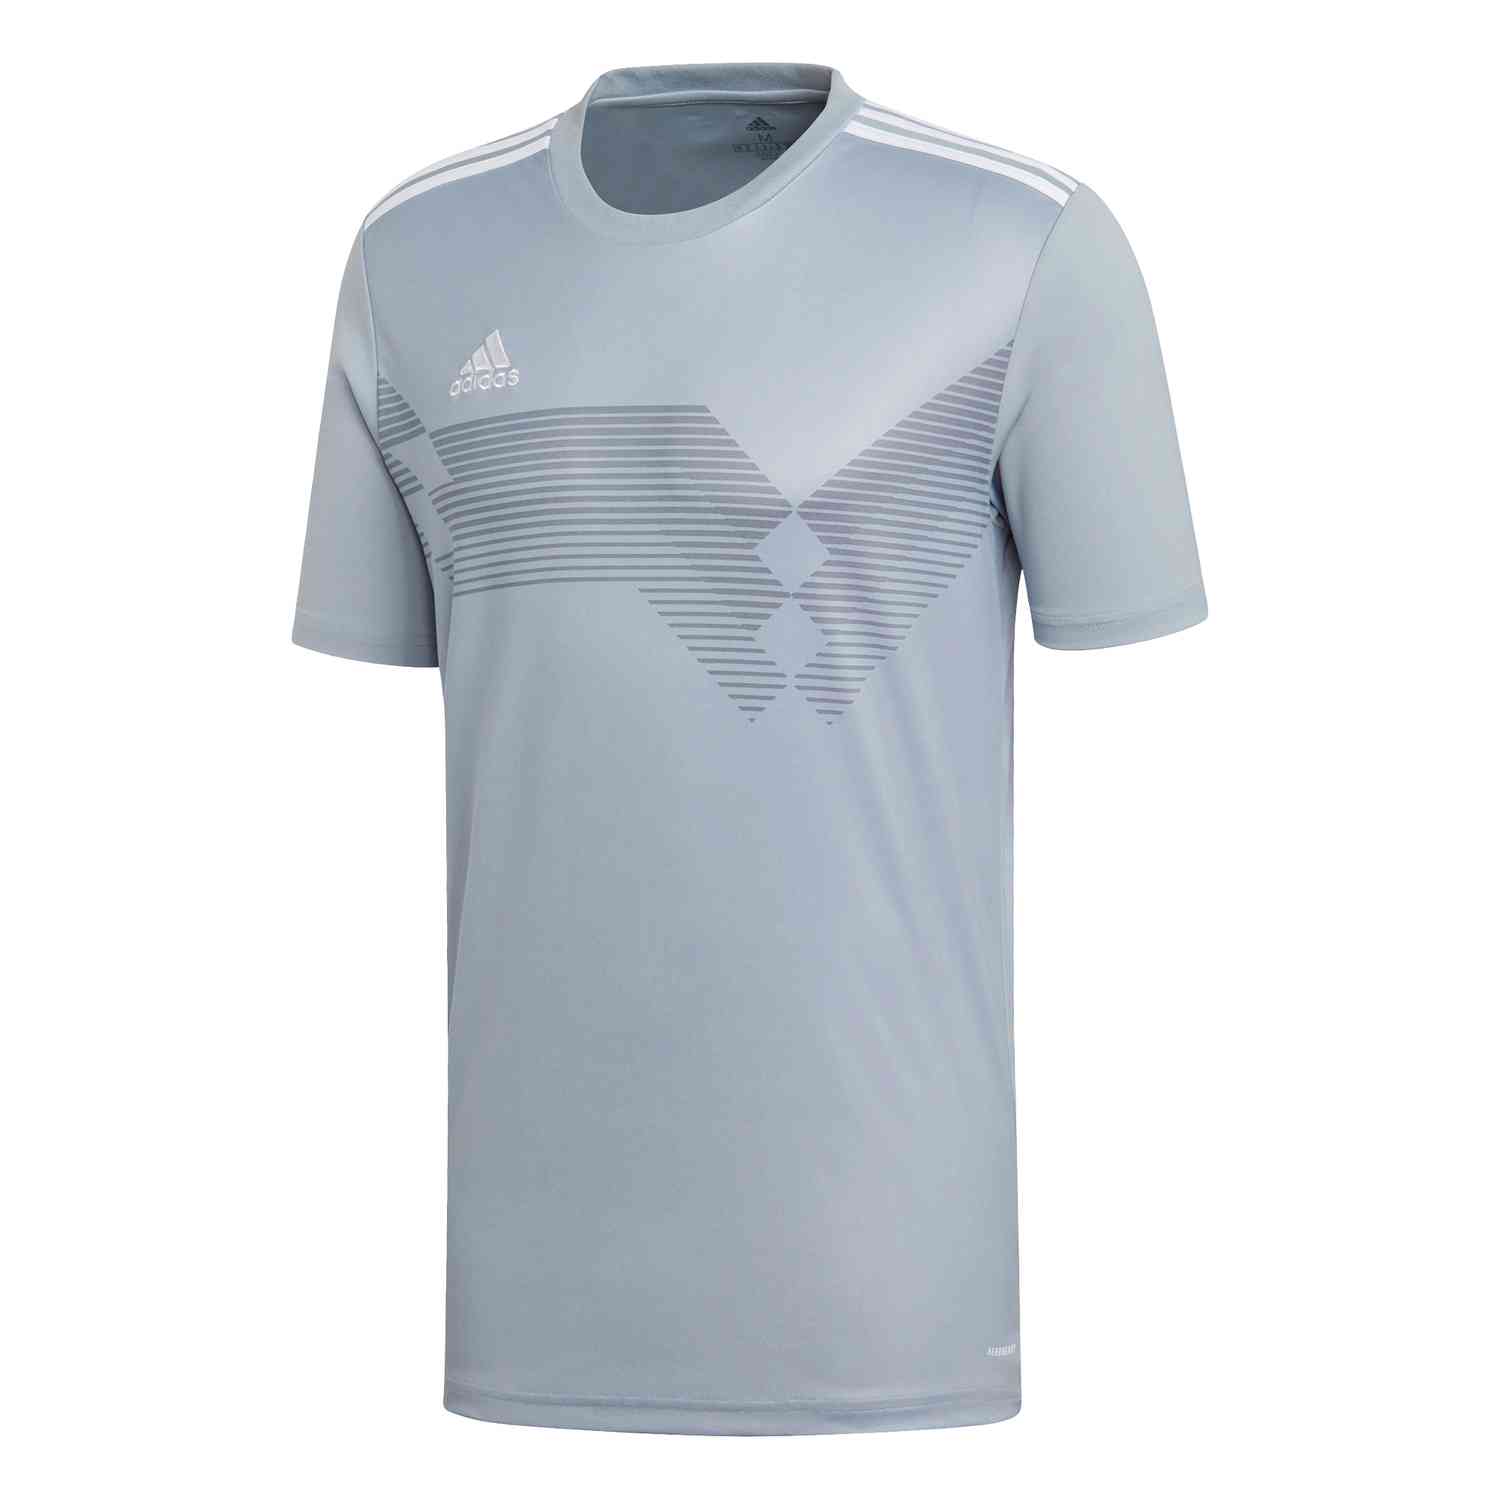 adidas Campeon 19 Jersey - Light Grey/White - SoccerPro